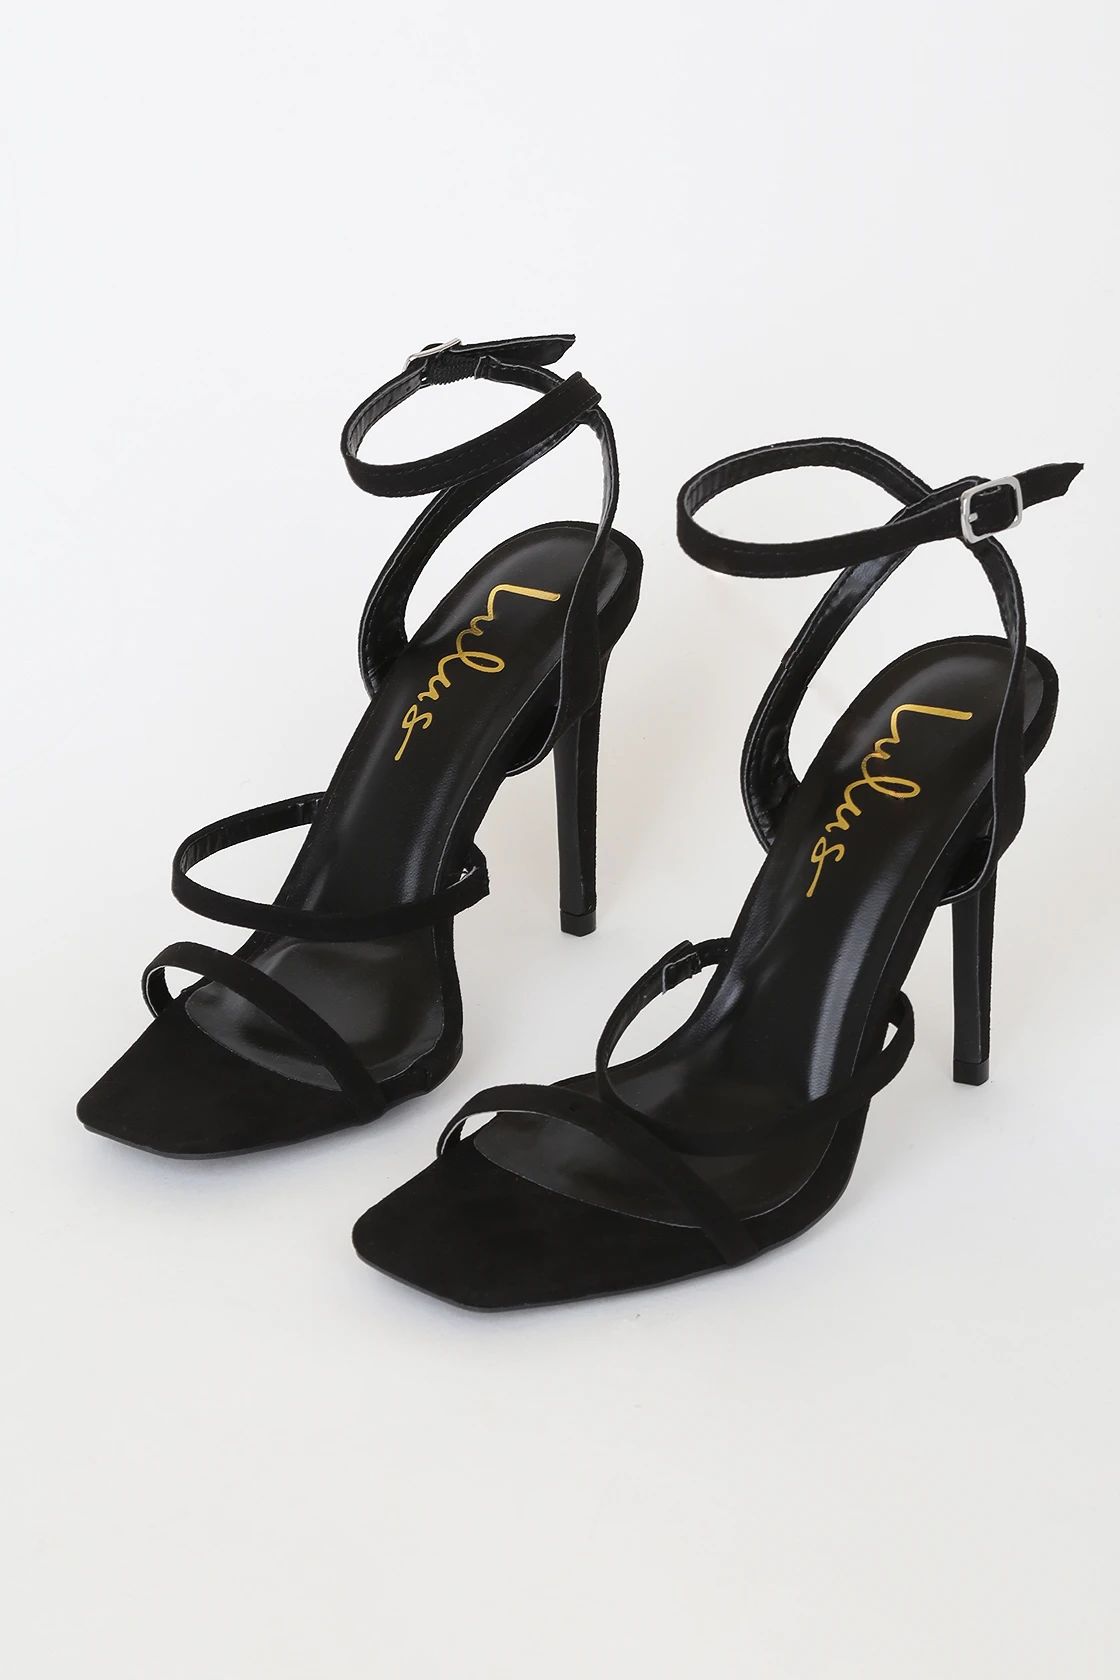 Leticiya Black Suede Ankle-Strap High Heel Sandals | Lulus (US)